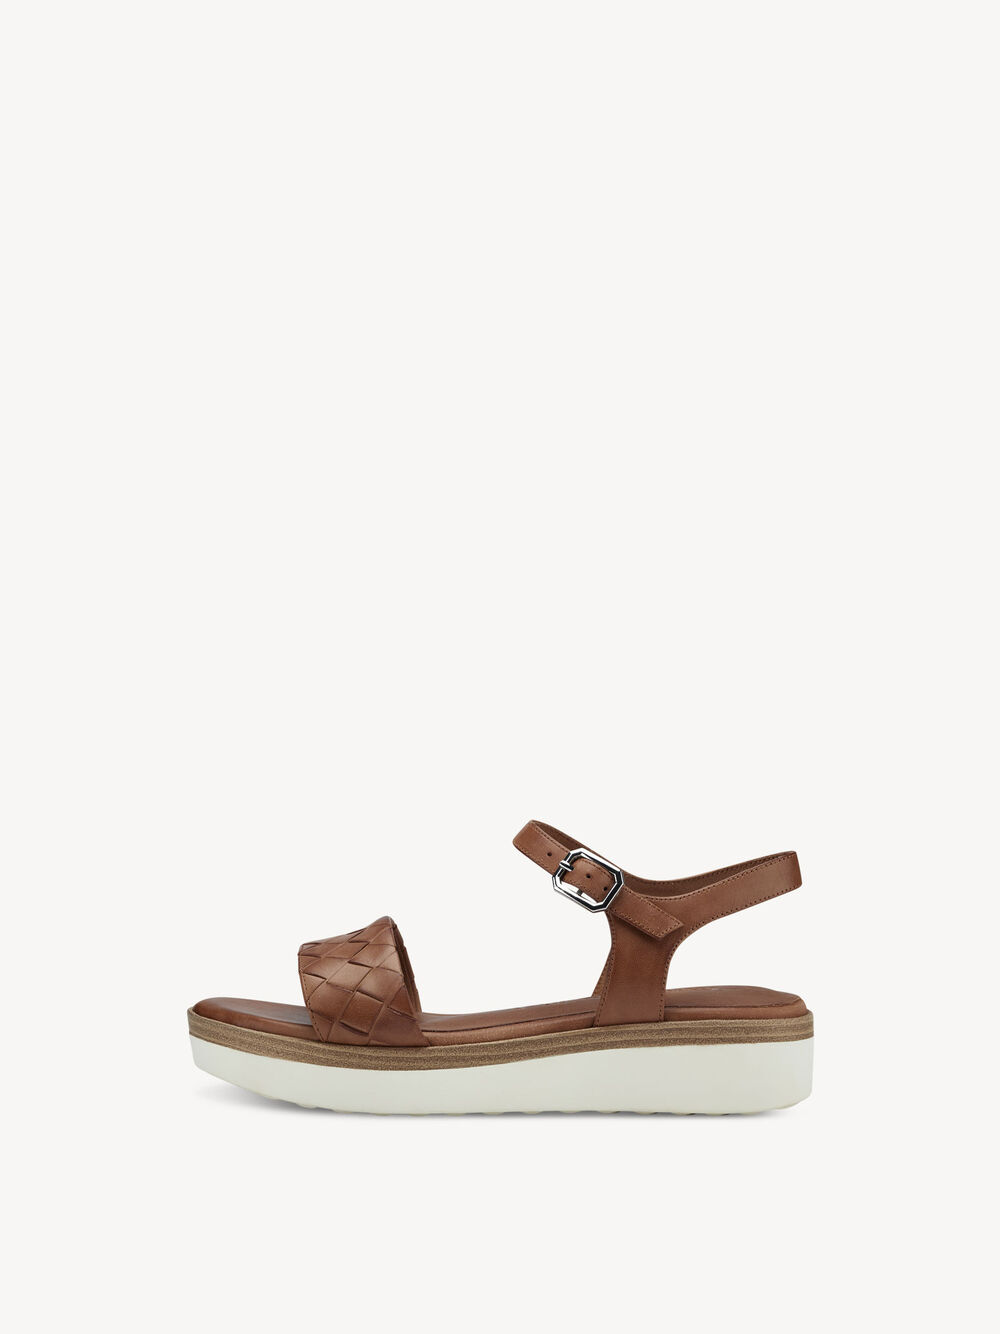 Heeled sandal 1-1-28216-20-440: Buy Tamaris Sandals online!